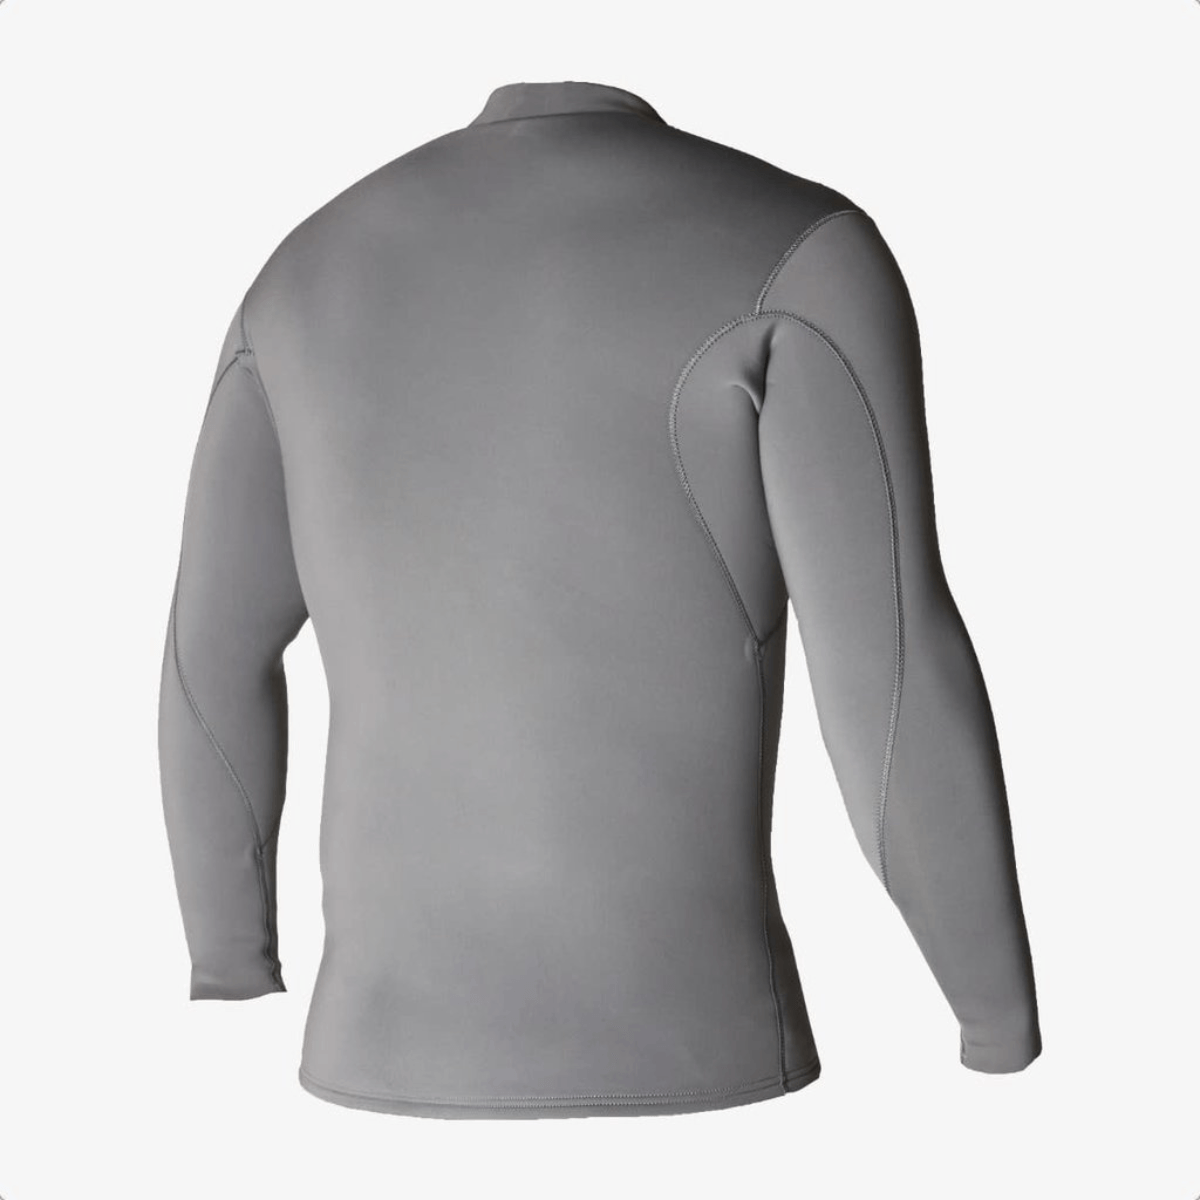 Vissla 2mm Solid Sets Front Zip Jacket in Grey - BoardCo